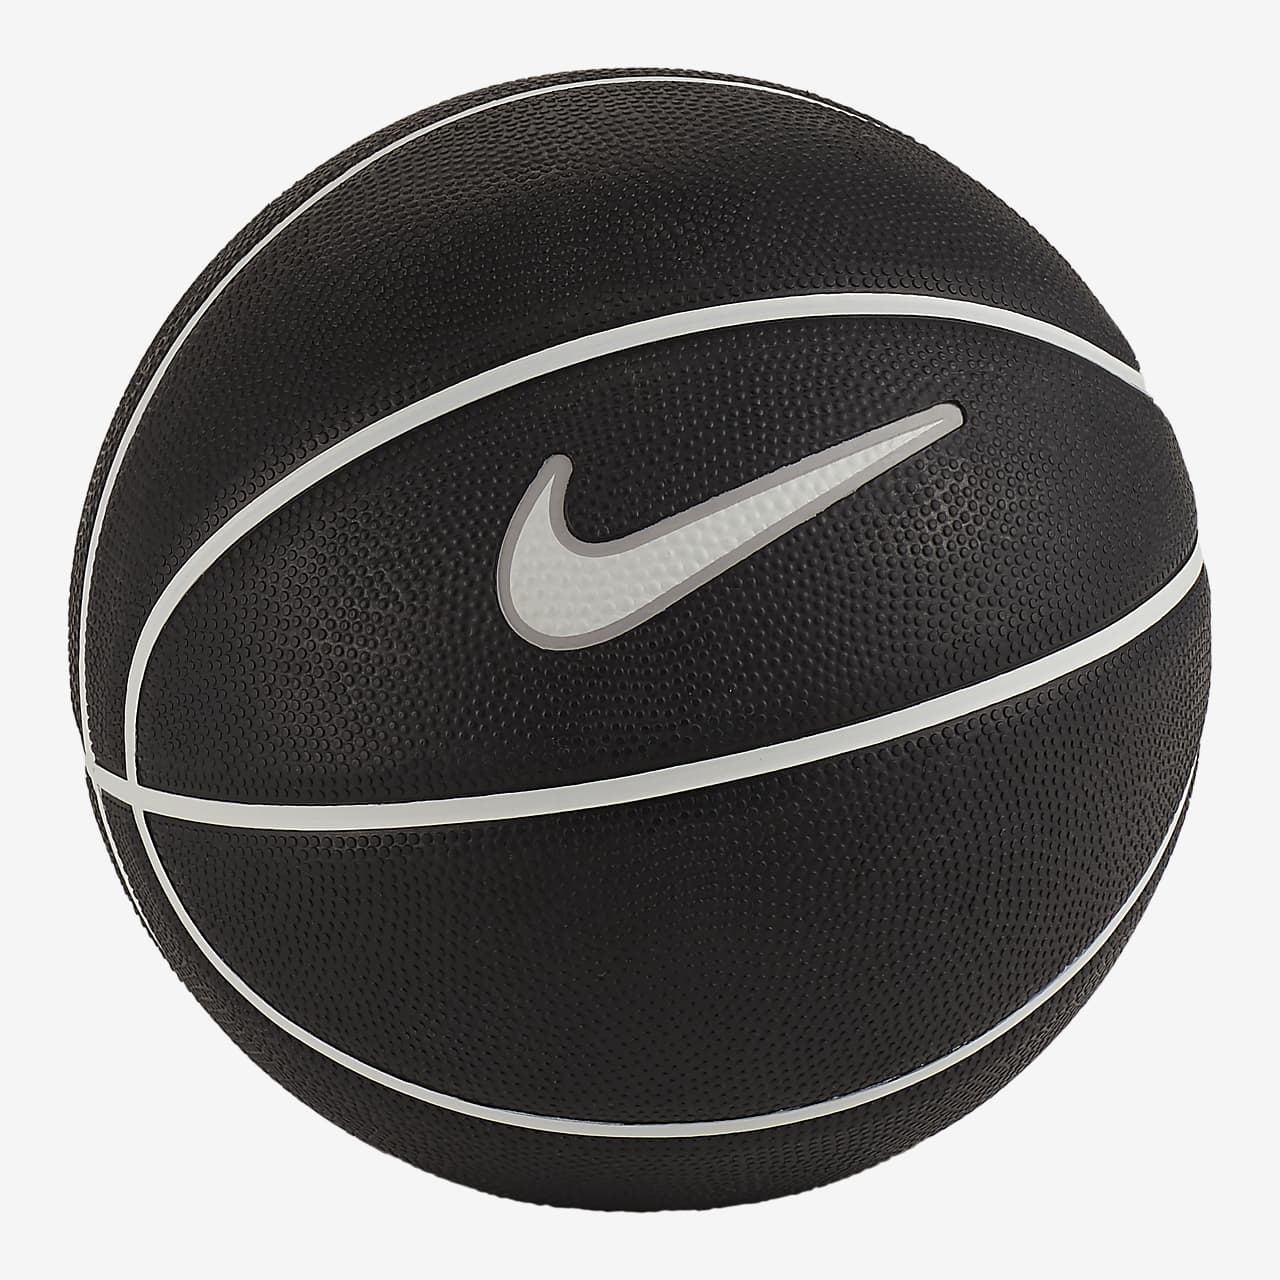 Nike Skills NYC Basketball (Size 3 